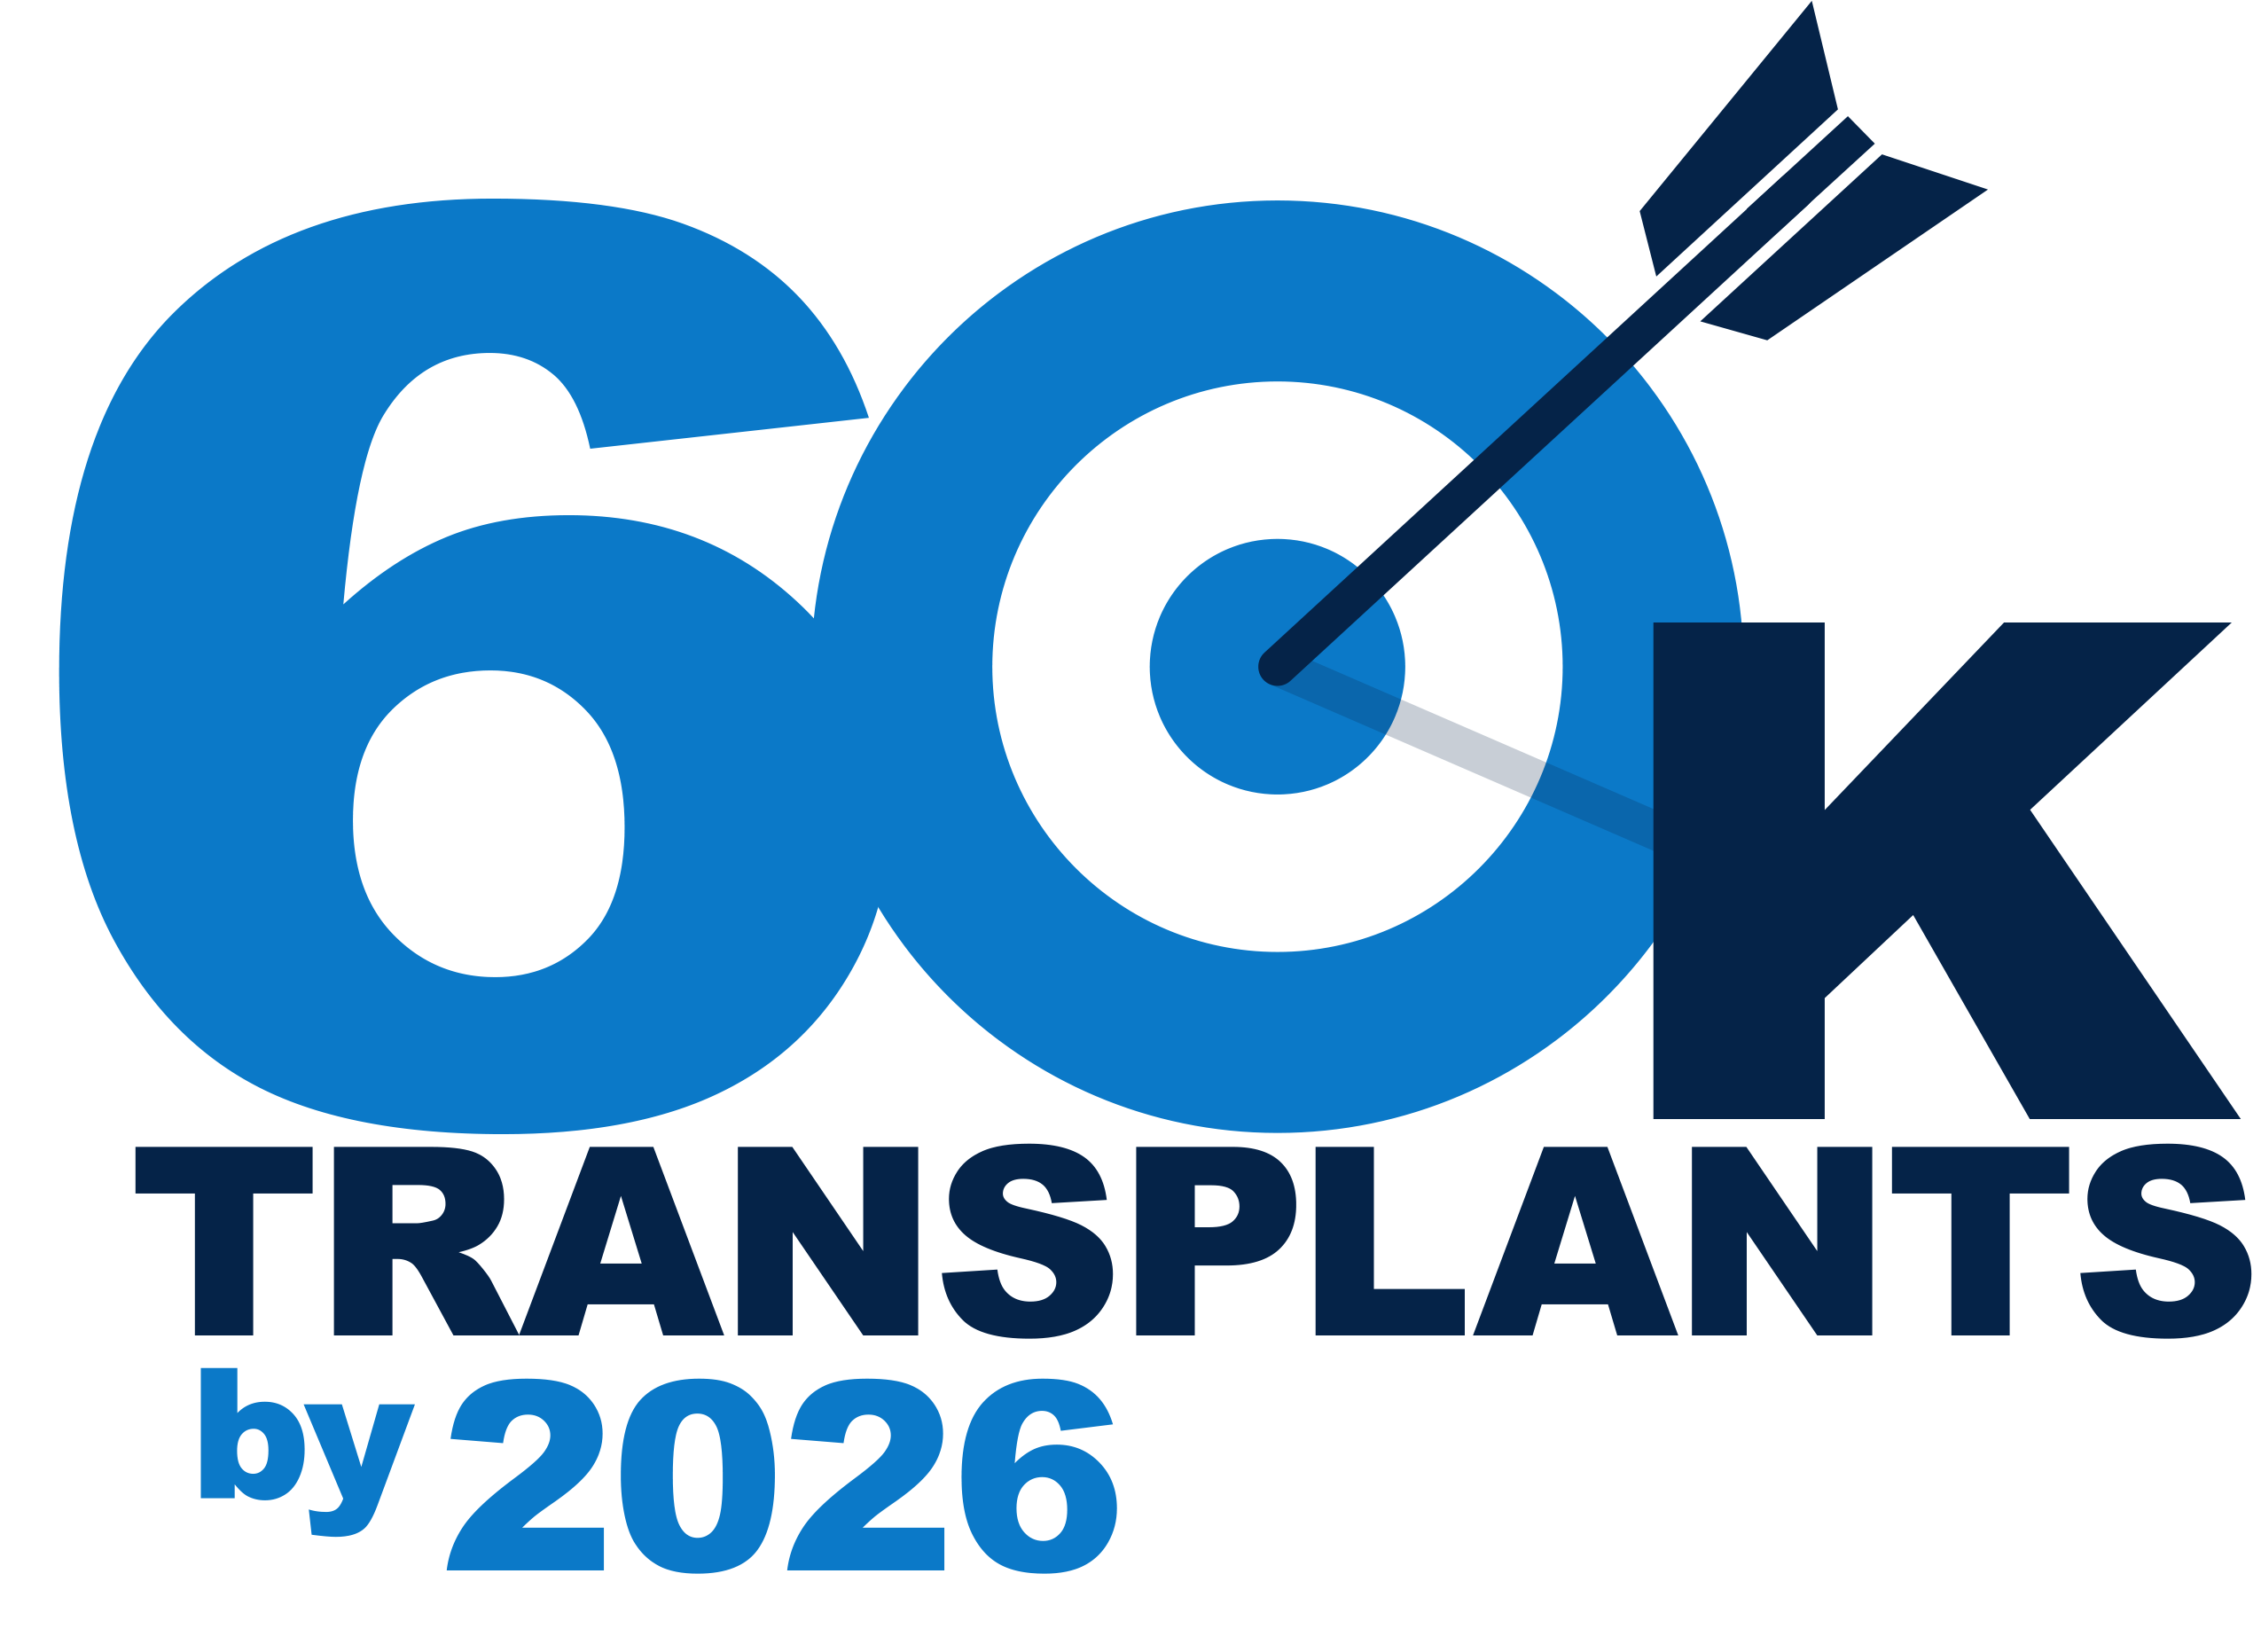 Bold Aim of 60K transplants by 2026